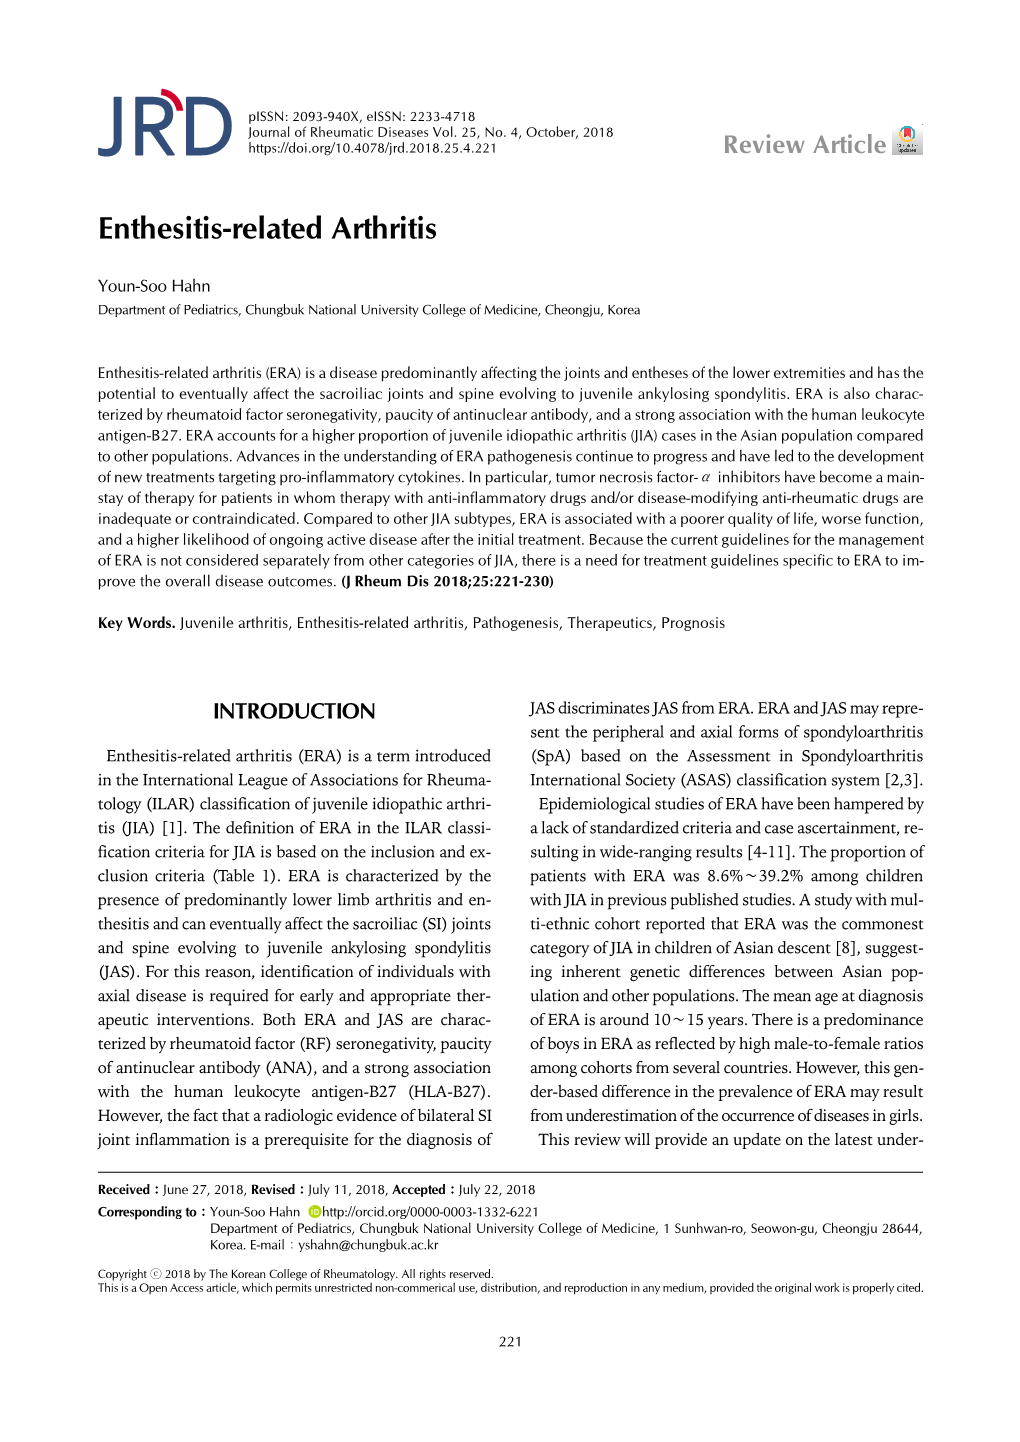 Enthesitis-Related Arthritis